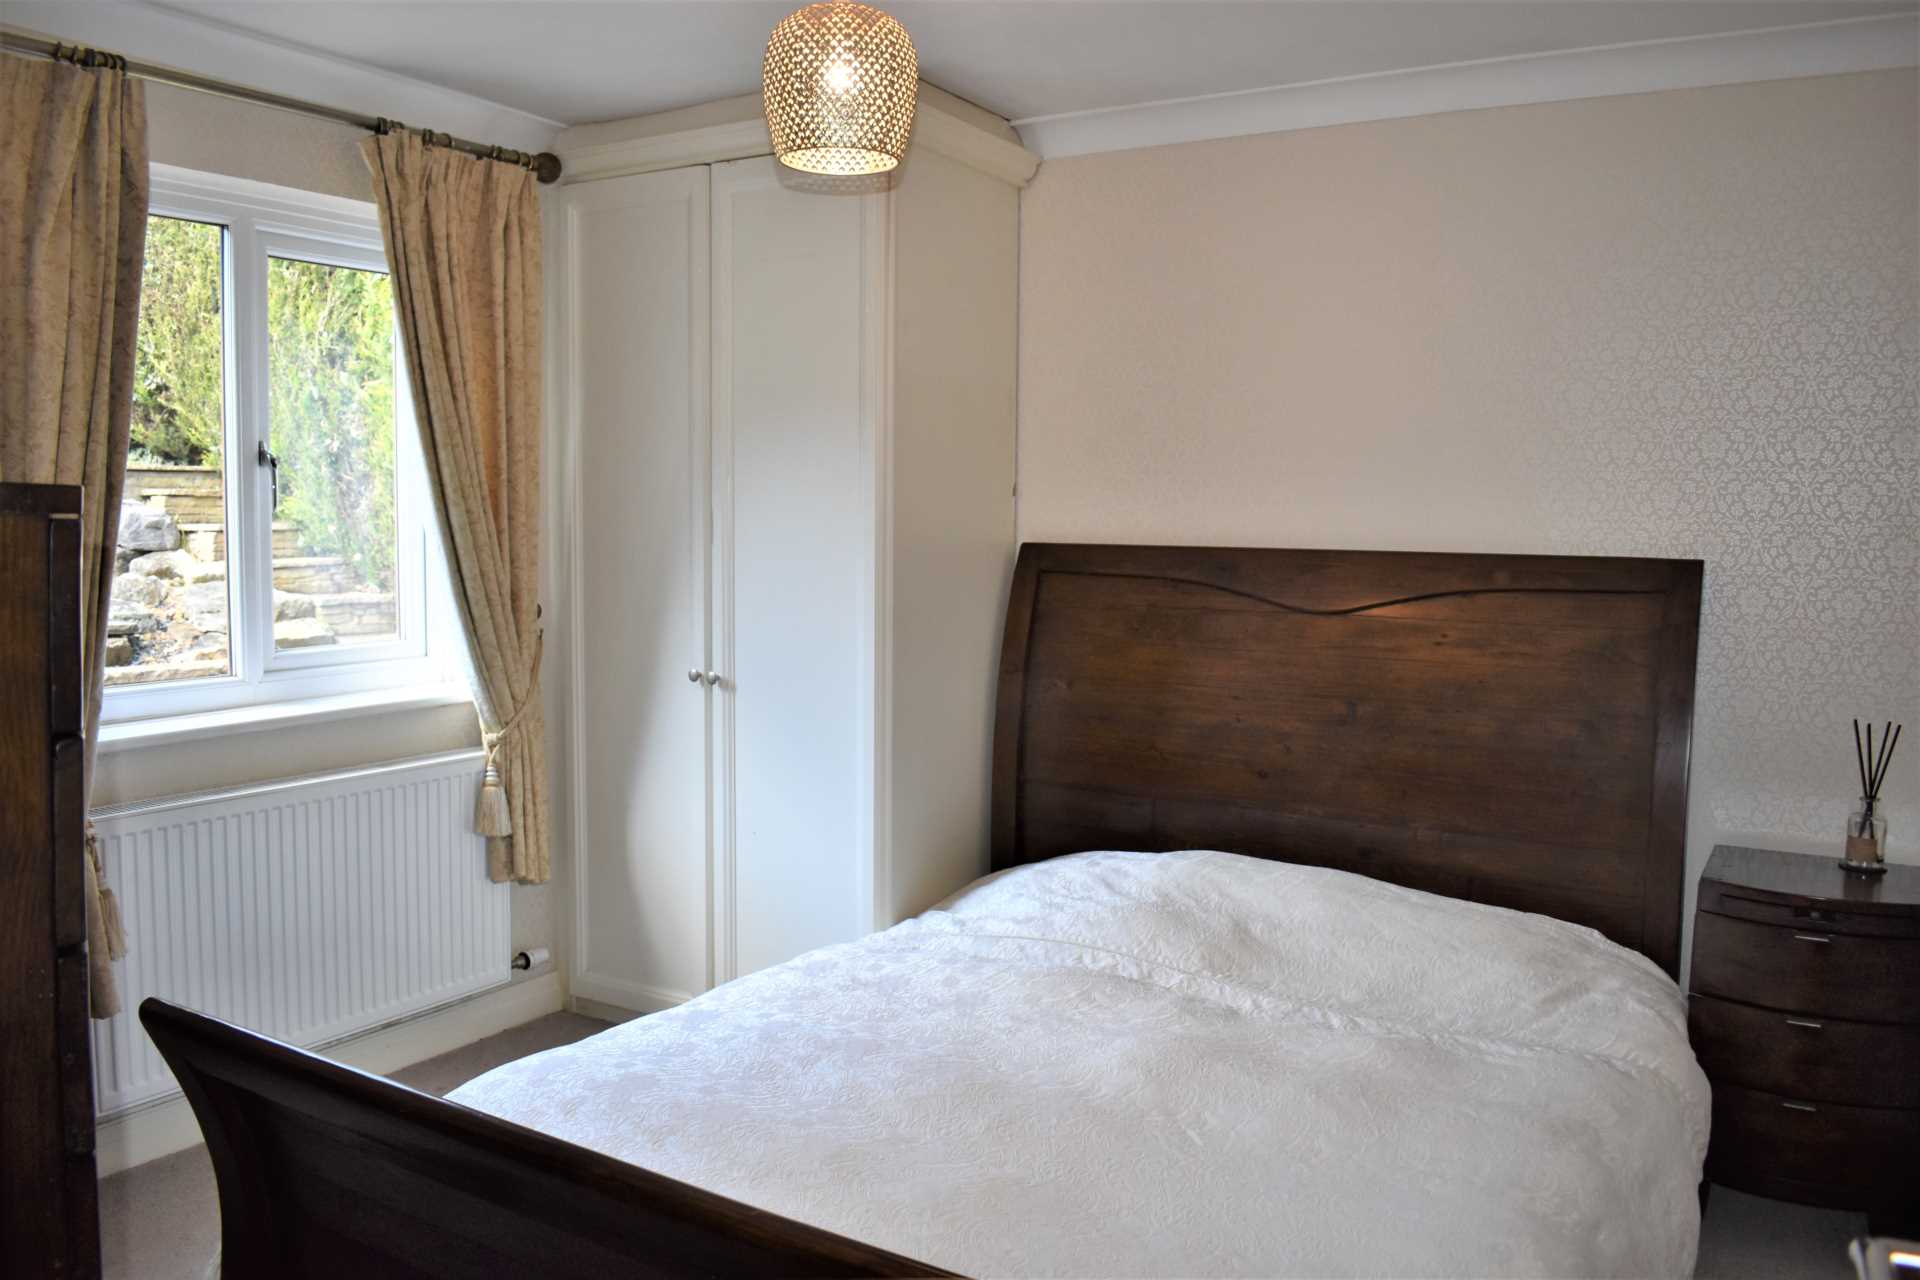 3 or 4 bedrooms - Grange Park Road, Bromley Cross, Image 28